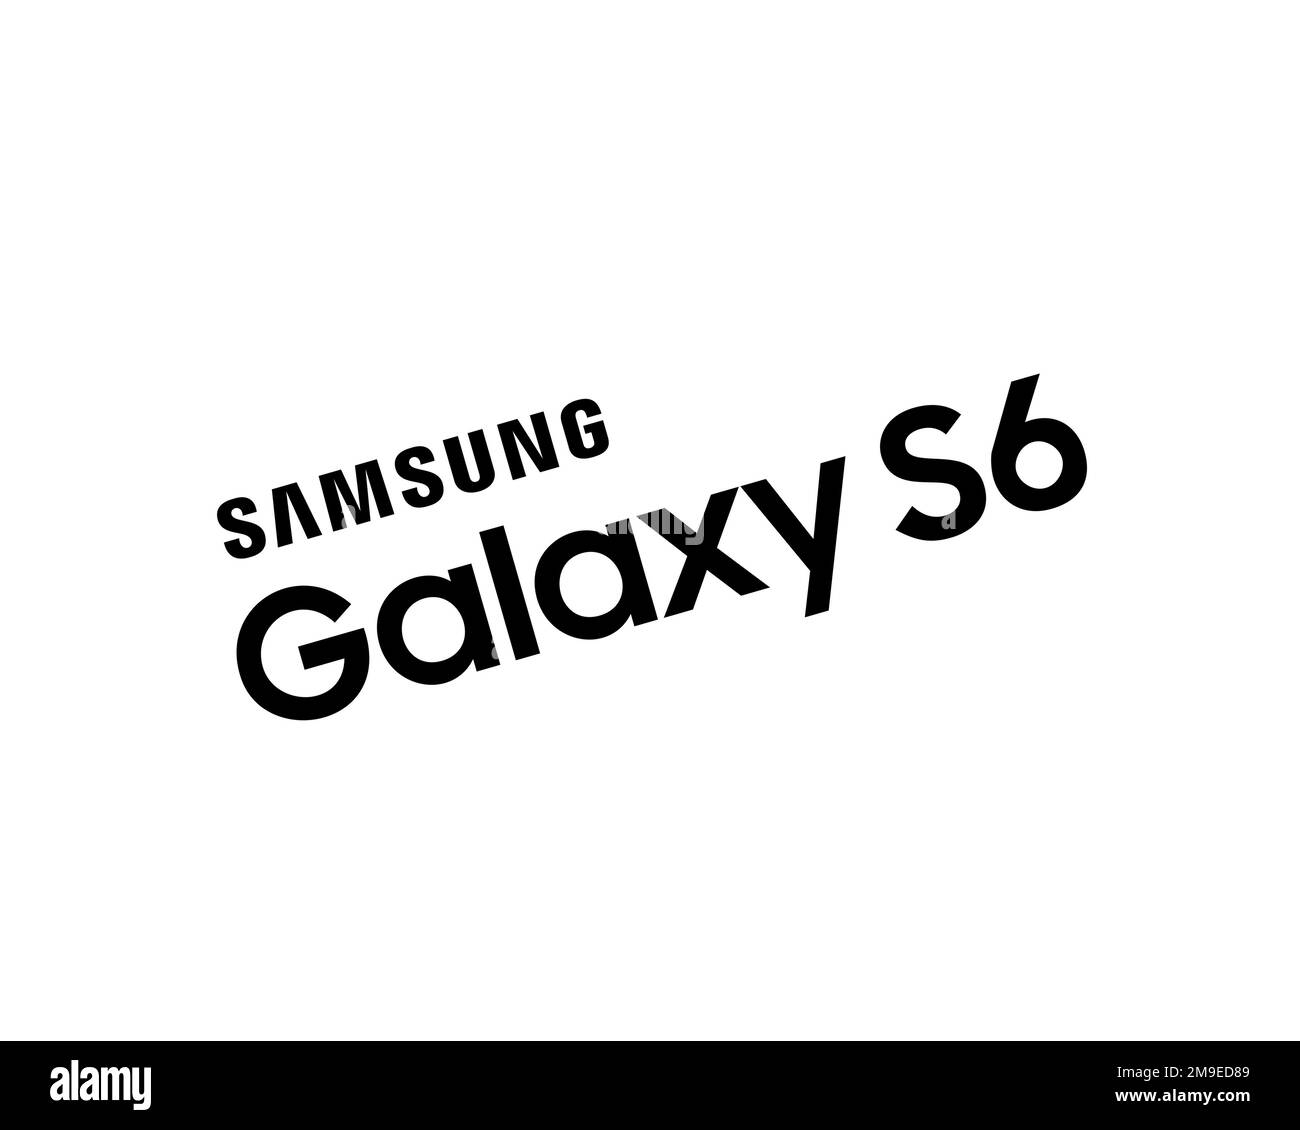 Samsung Galaxy S6, rotated logo, white background Stock Photo